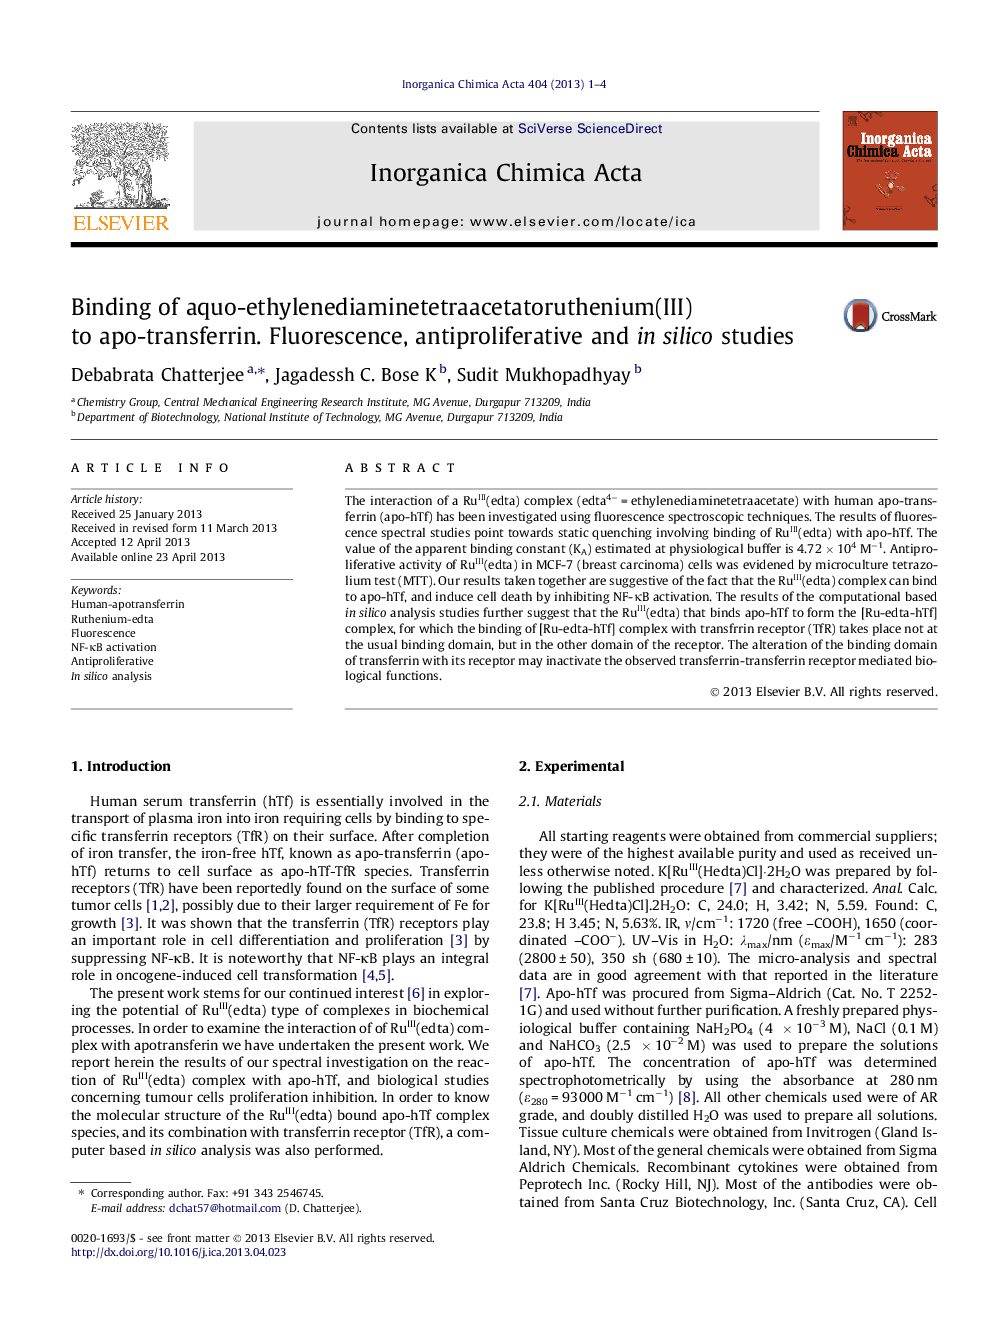 Binding of aquo-ethylenediaminetetraacetatoruthenium(III) to apo-transferrin. Fluorescence, antiproliferative and in silico studies